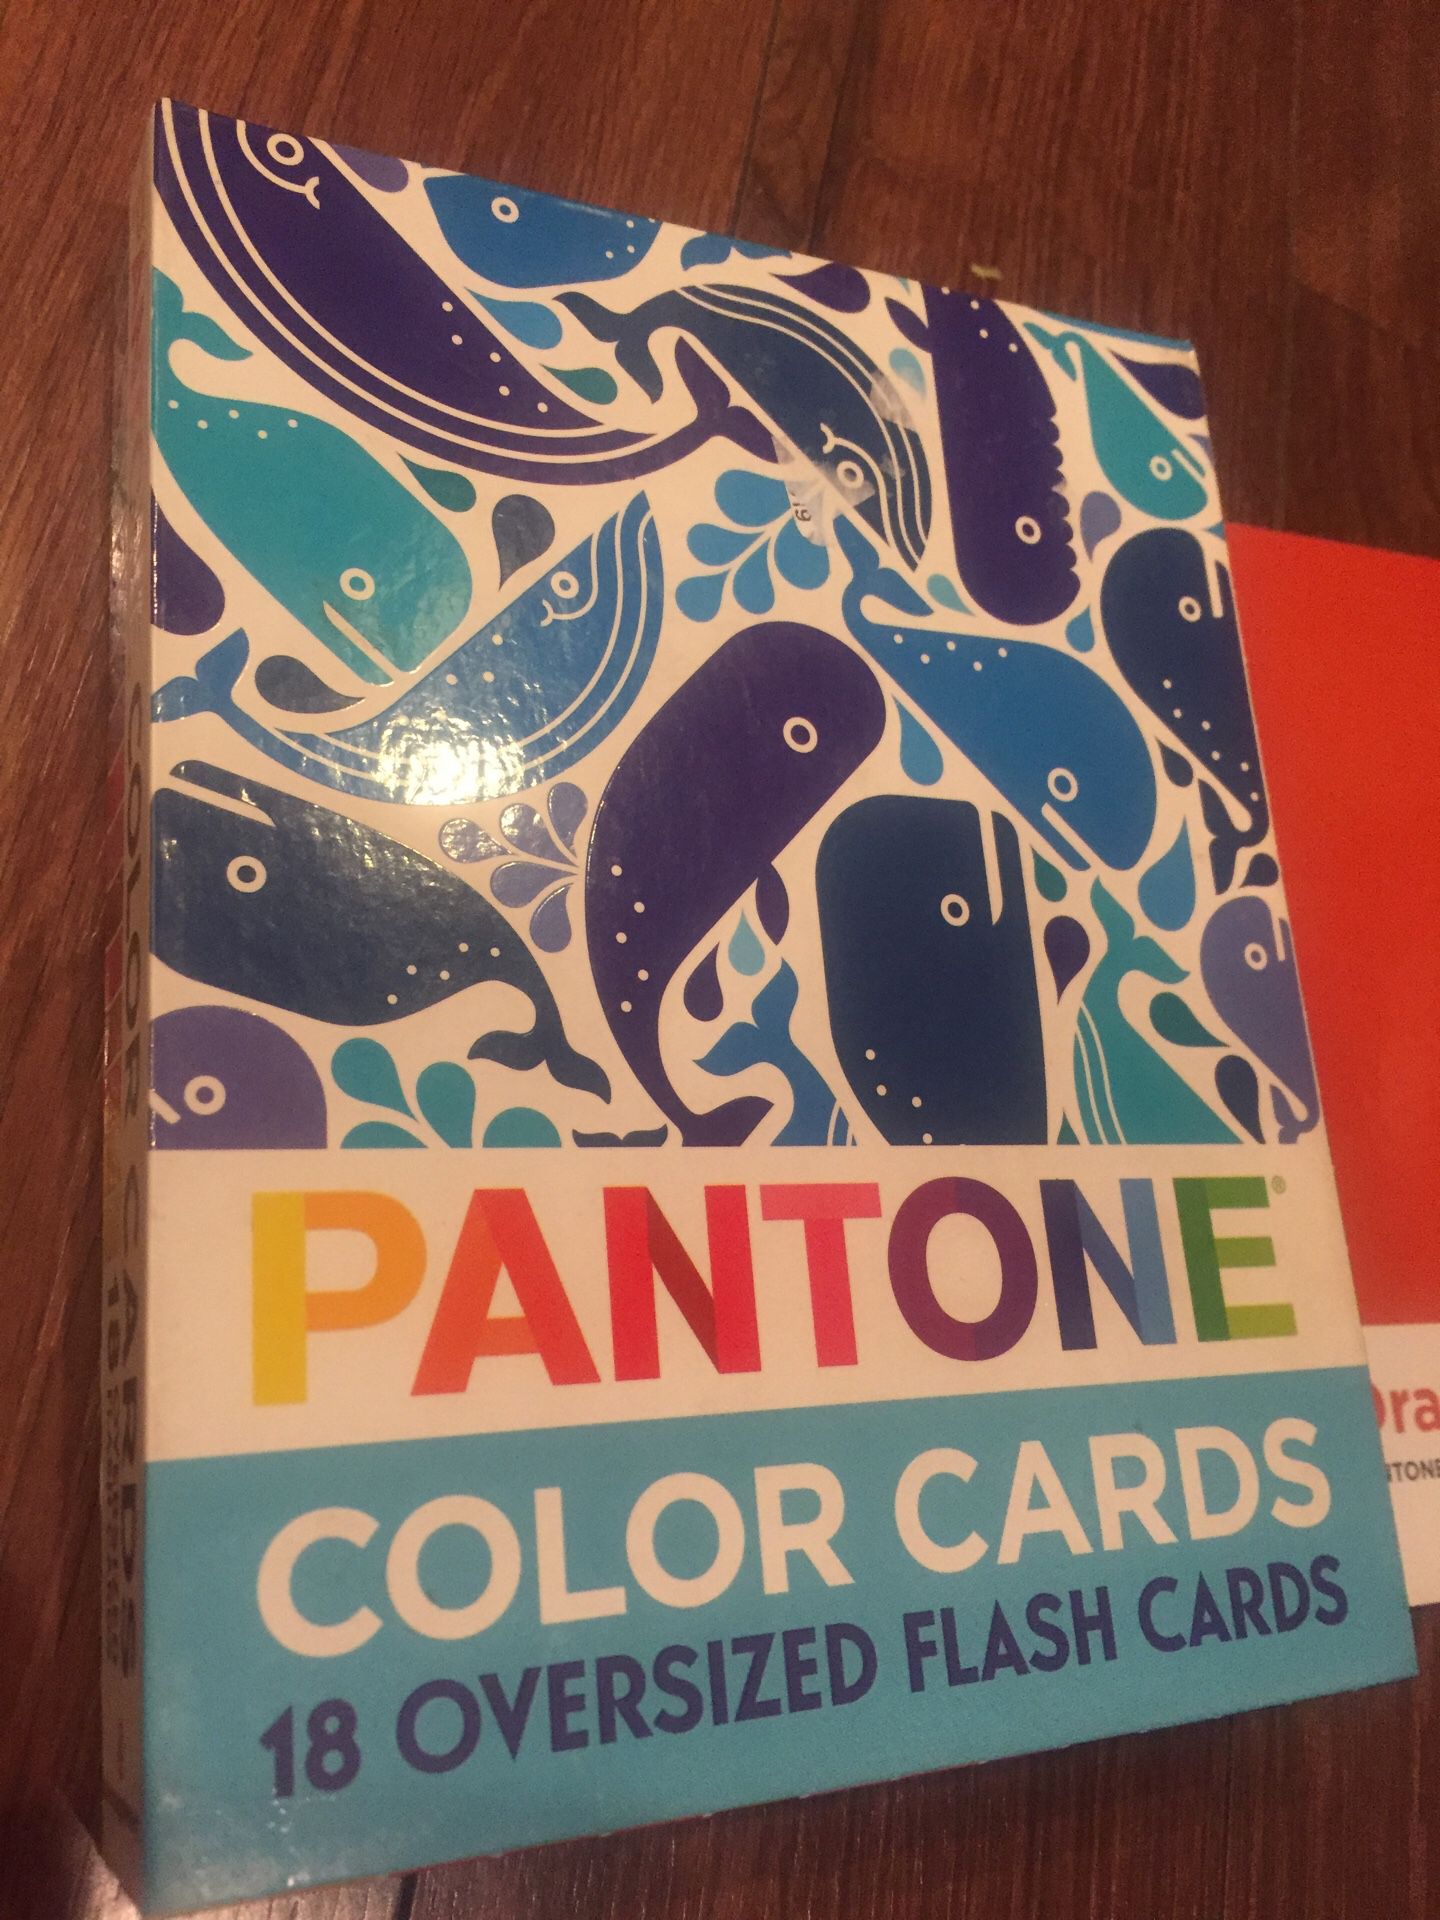 Pantone color cards flash cards game - nursery decor